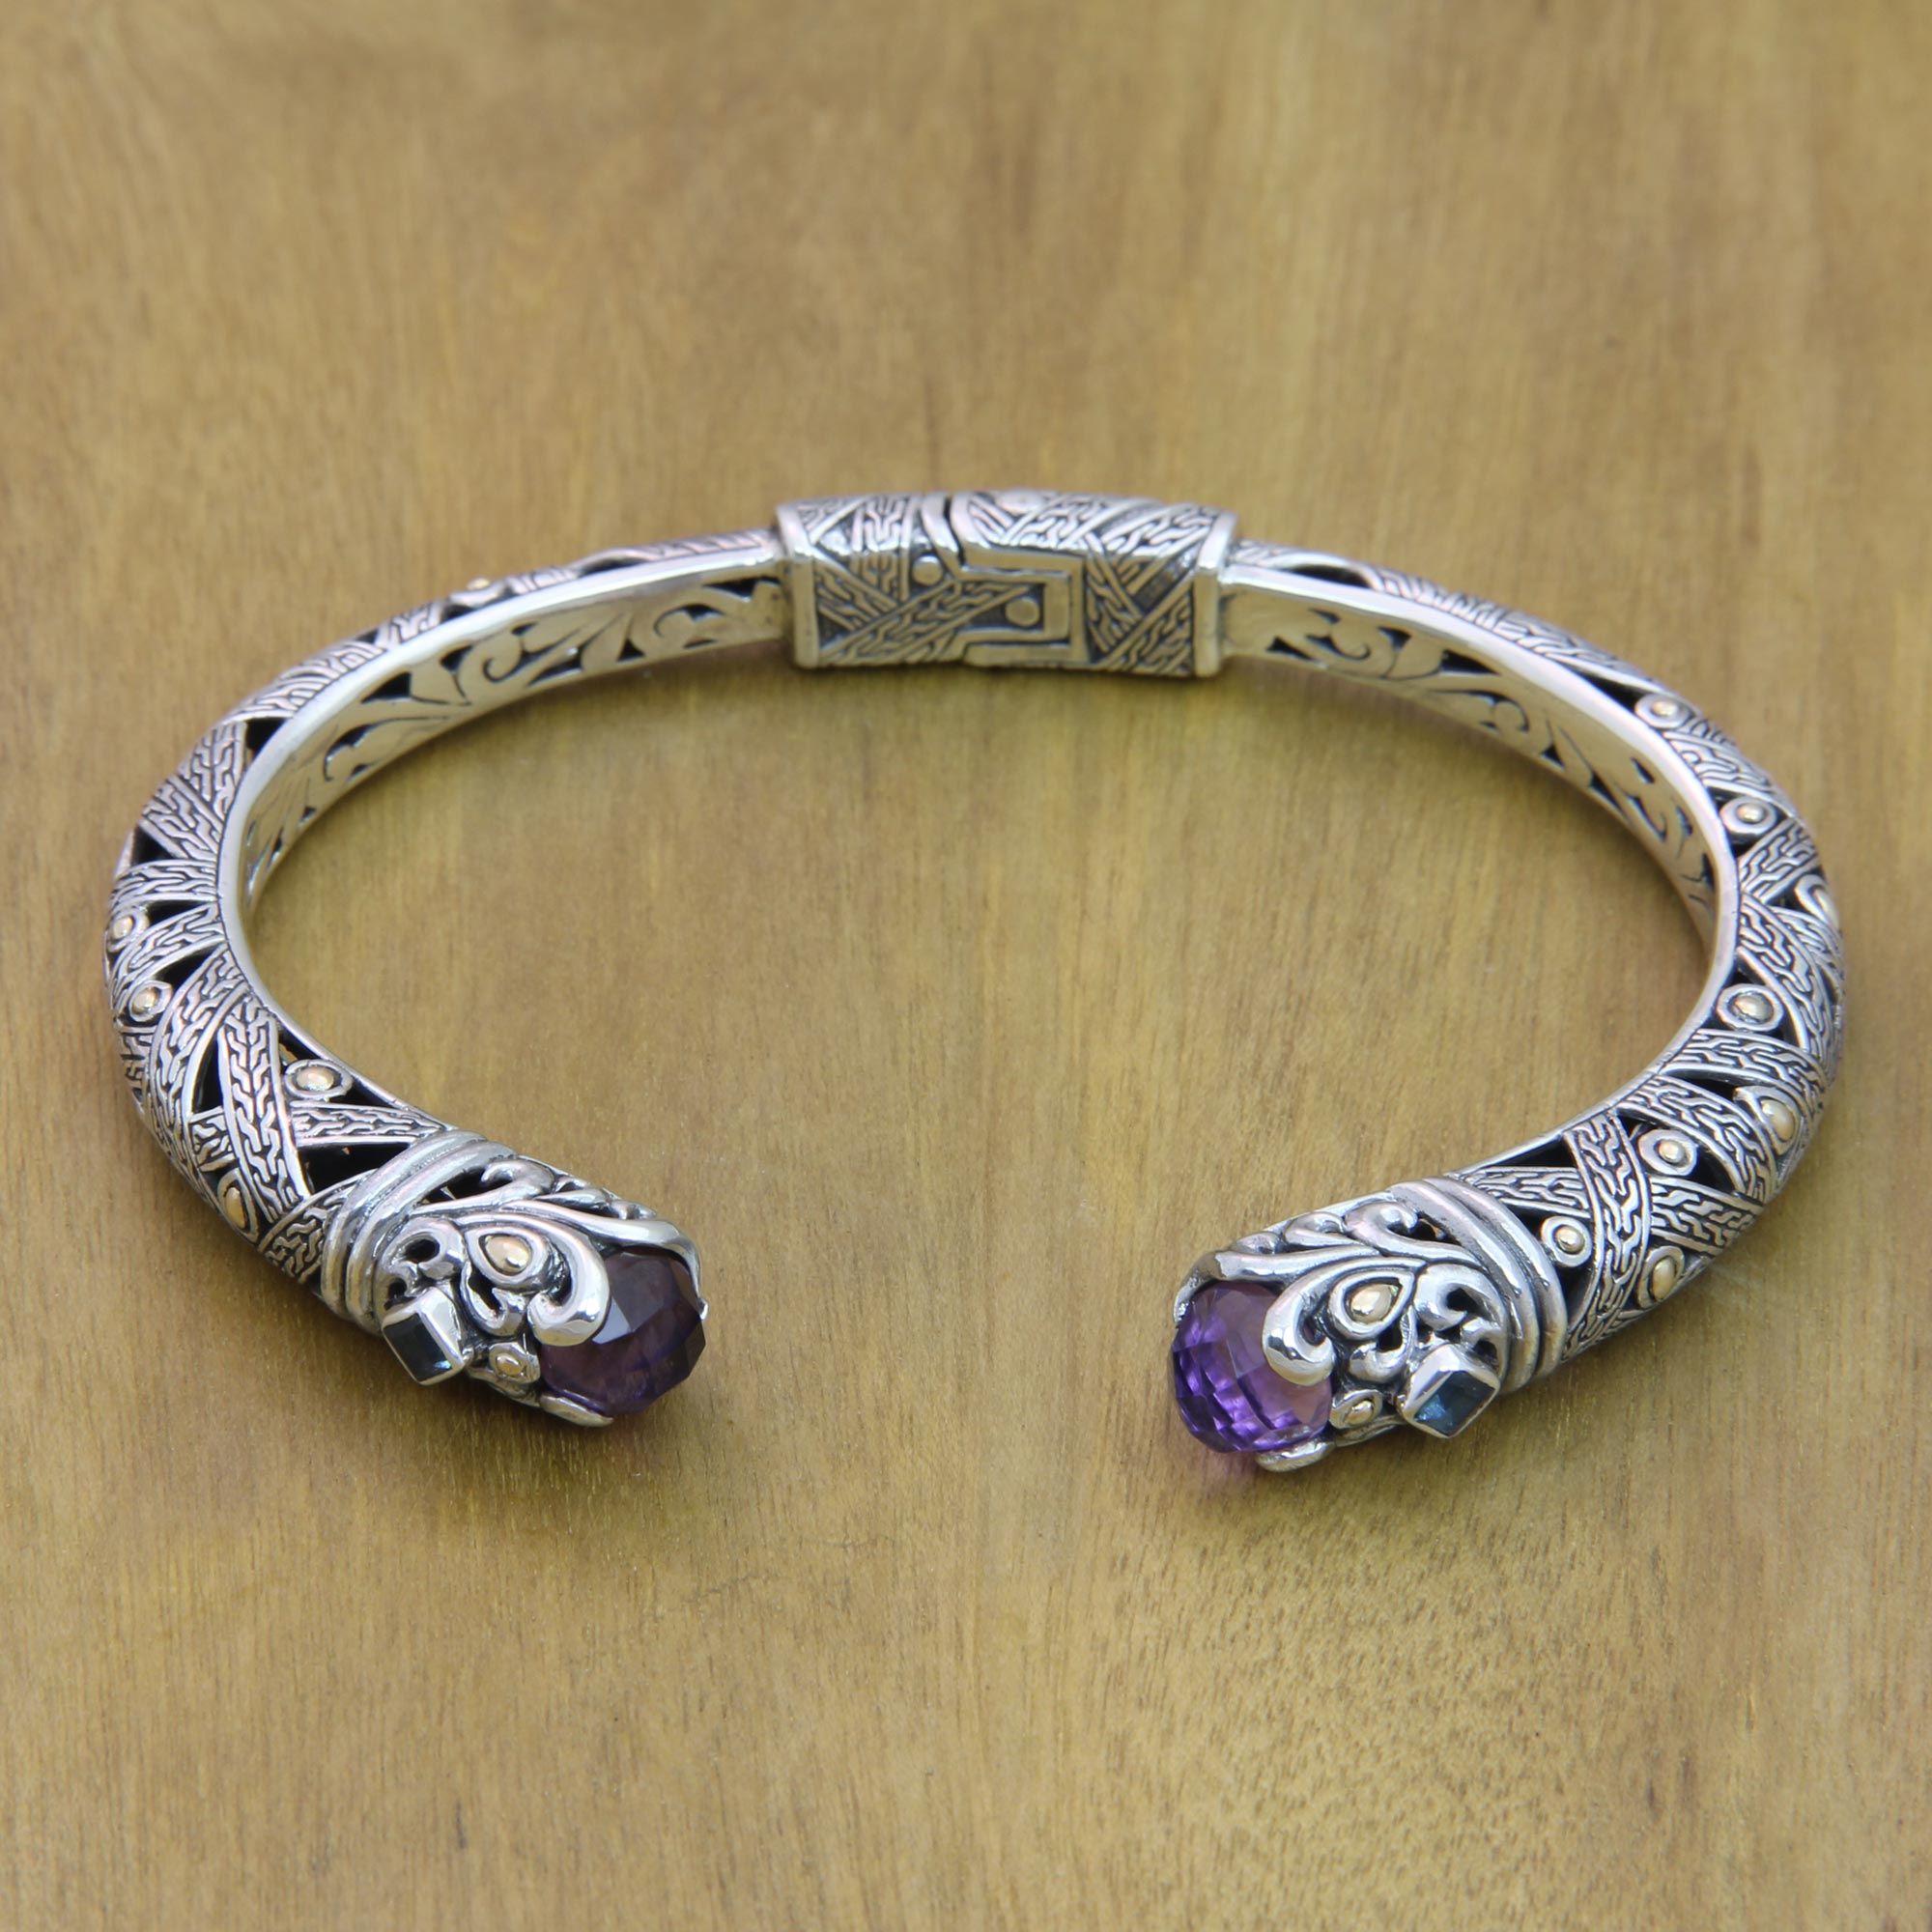 Mayan Jewelry, Bracelets, women's bracelet, fashion accessory, turquoise,  cowgirl, western, leather